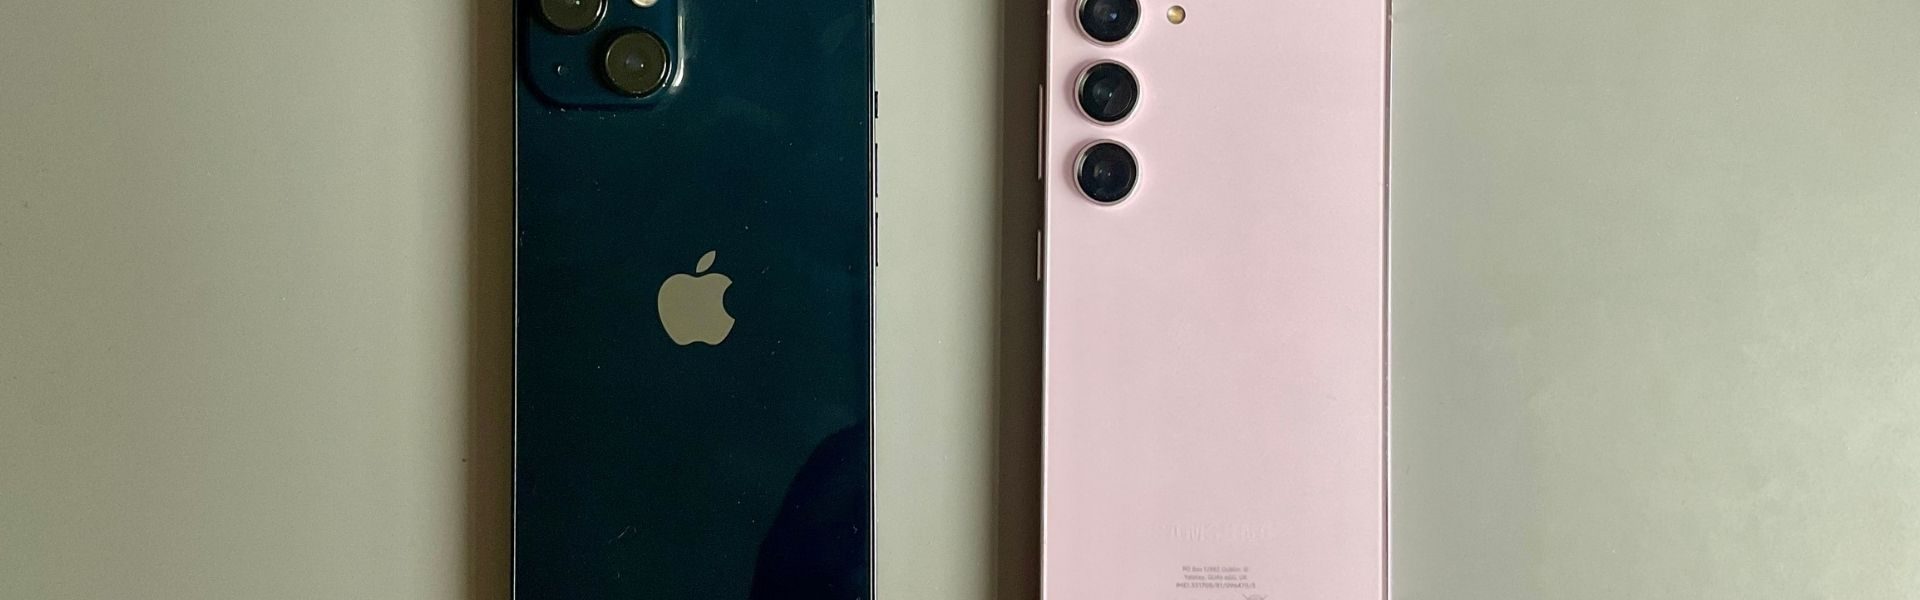 iPhone vs. Android: co jest lepsze?